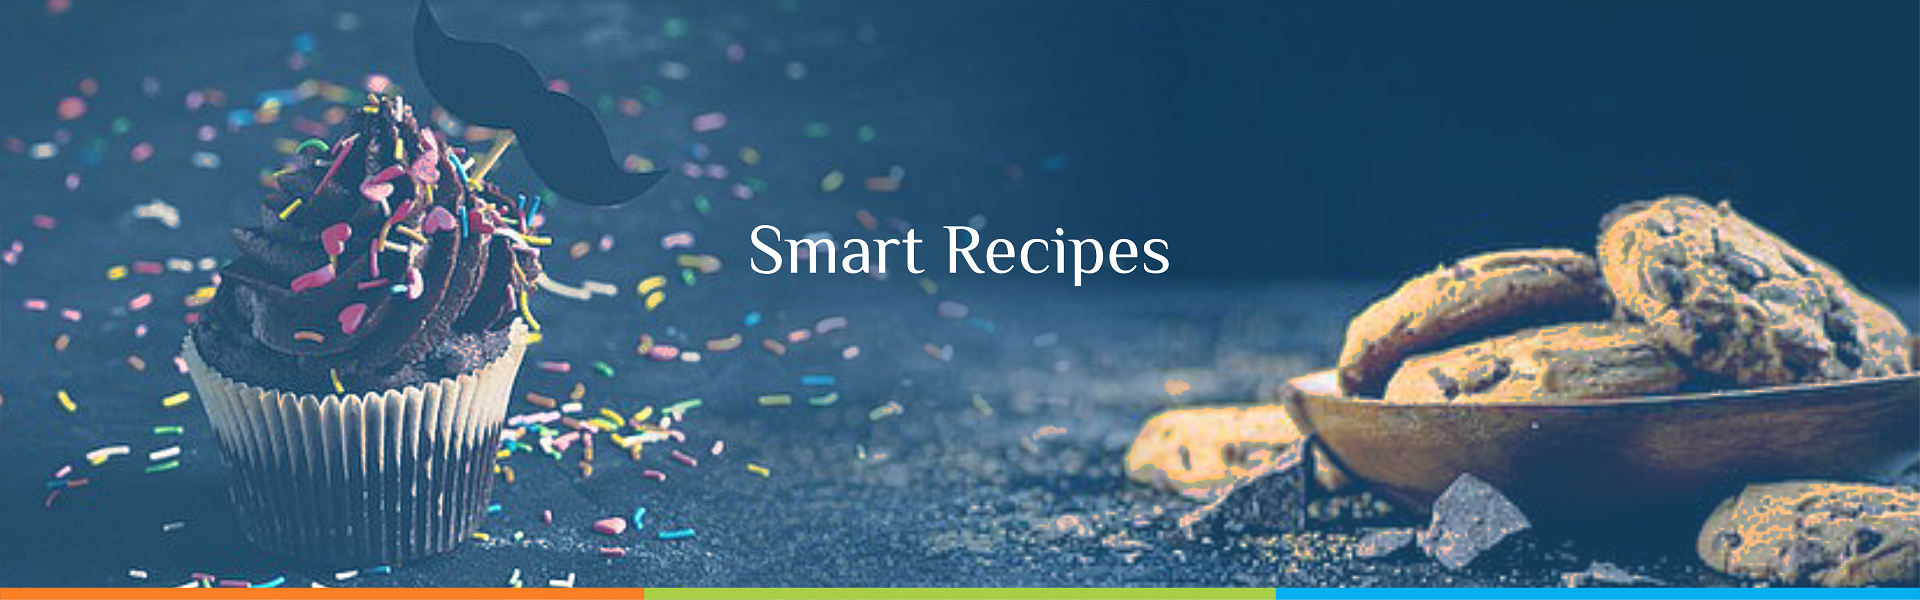 MBcare Smart Recipes